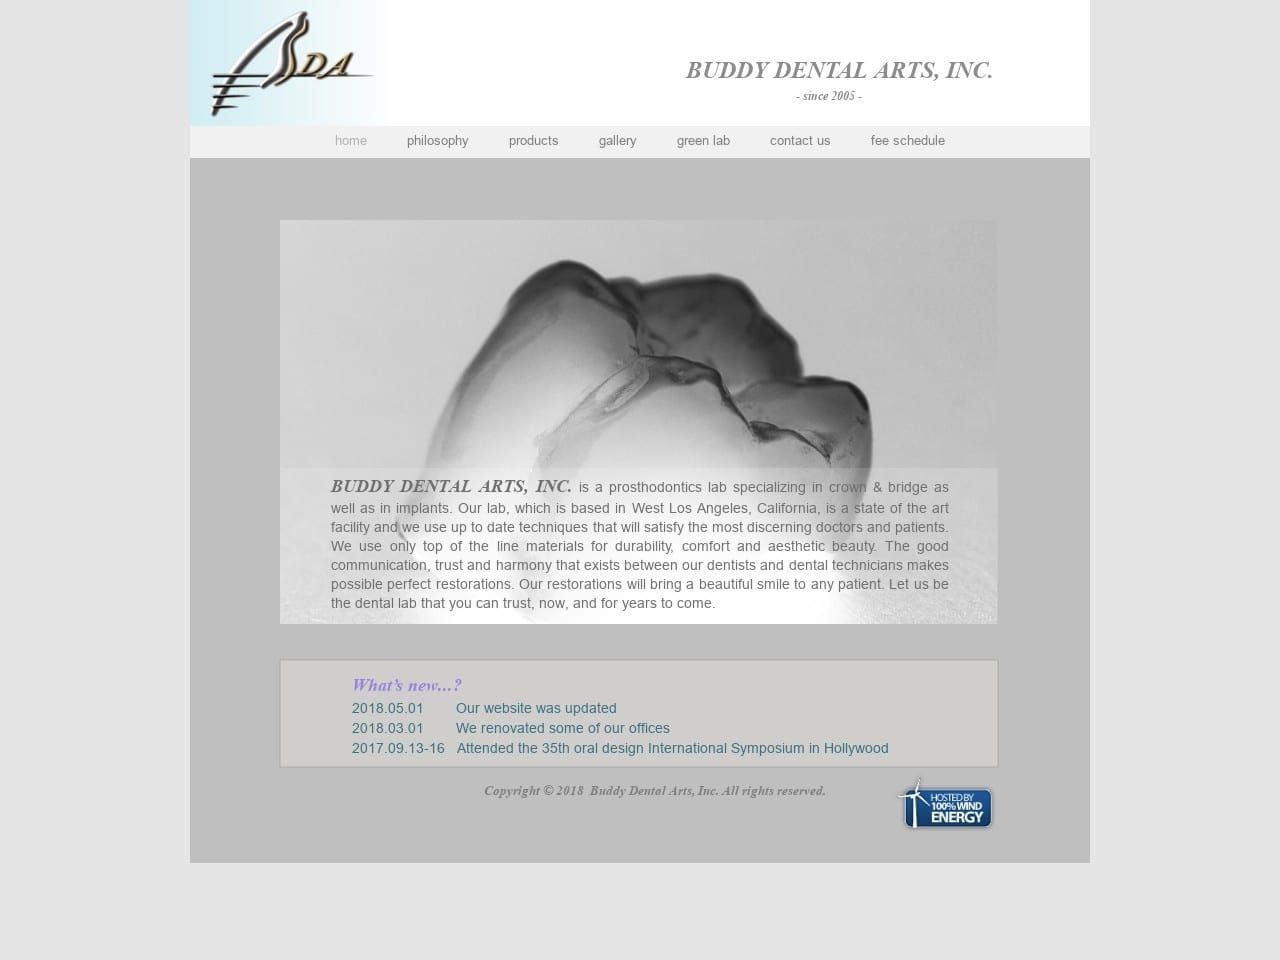 Buddy Dental Arts Inc. Website Screenshot from buddydentalarts.com